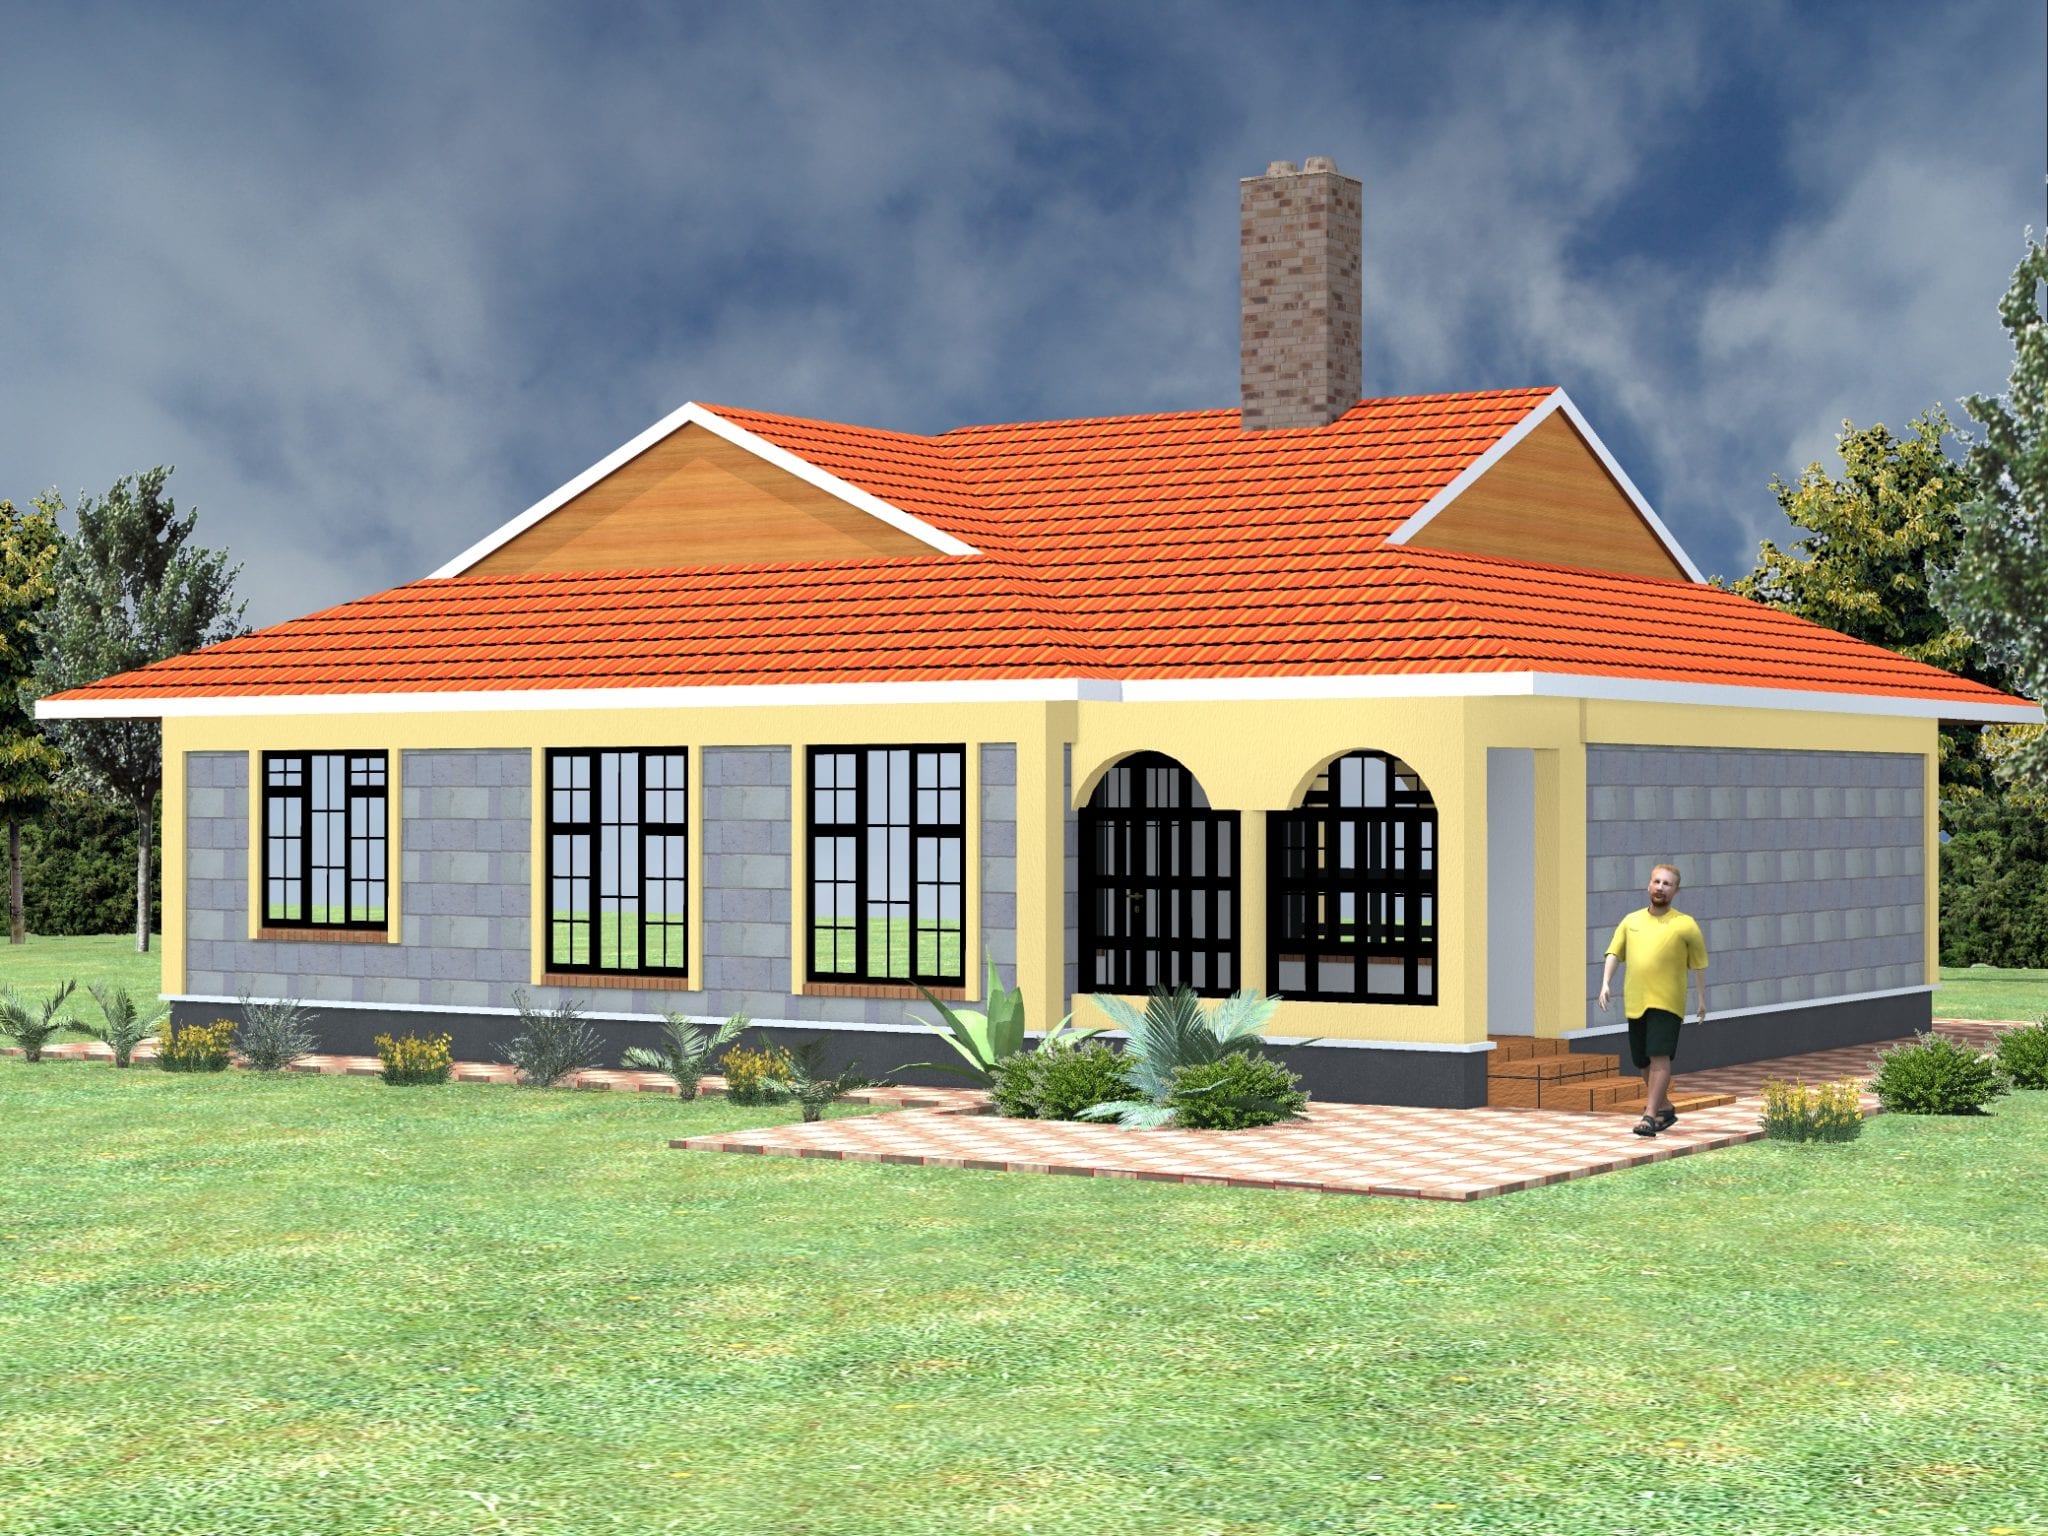 3 bedroom  house  plans  in kenya  pdf  HPD Consult